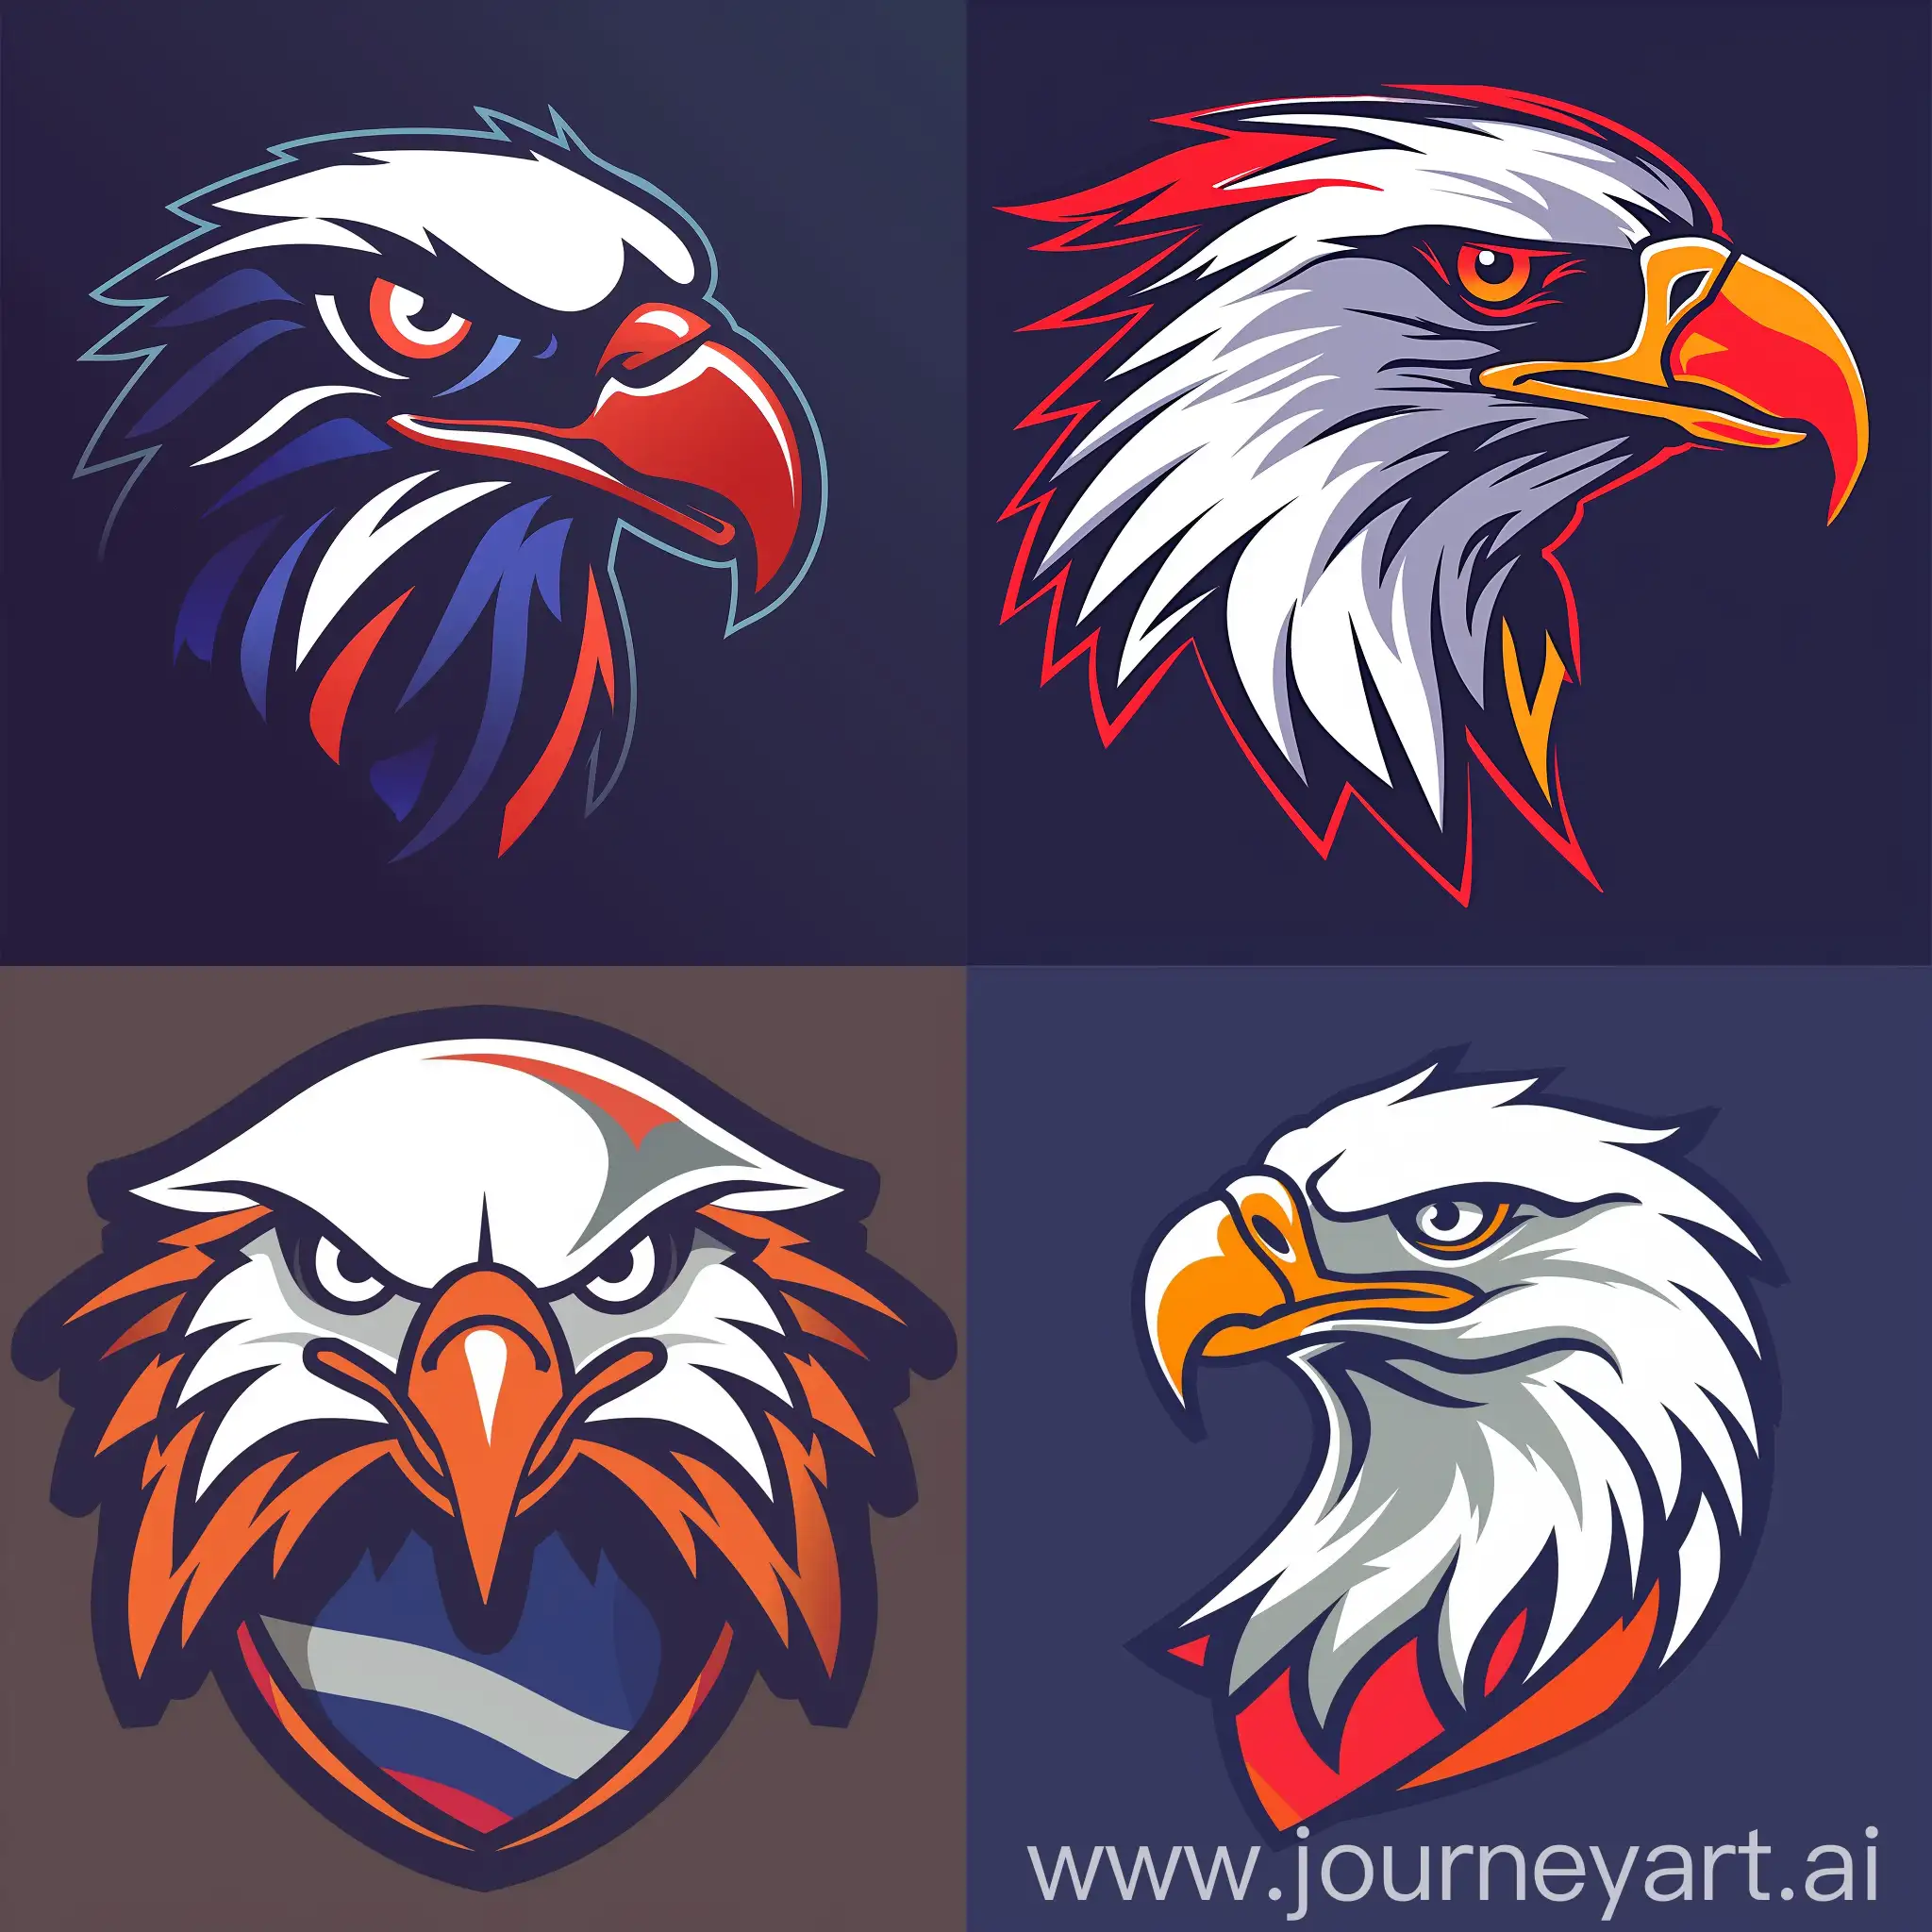 Armenian-Flag-Inspired-Cyber-Sports-Team-Logo-with-Eagle-Mascot